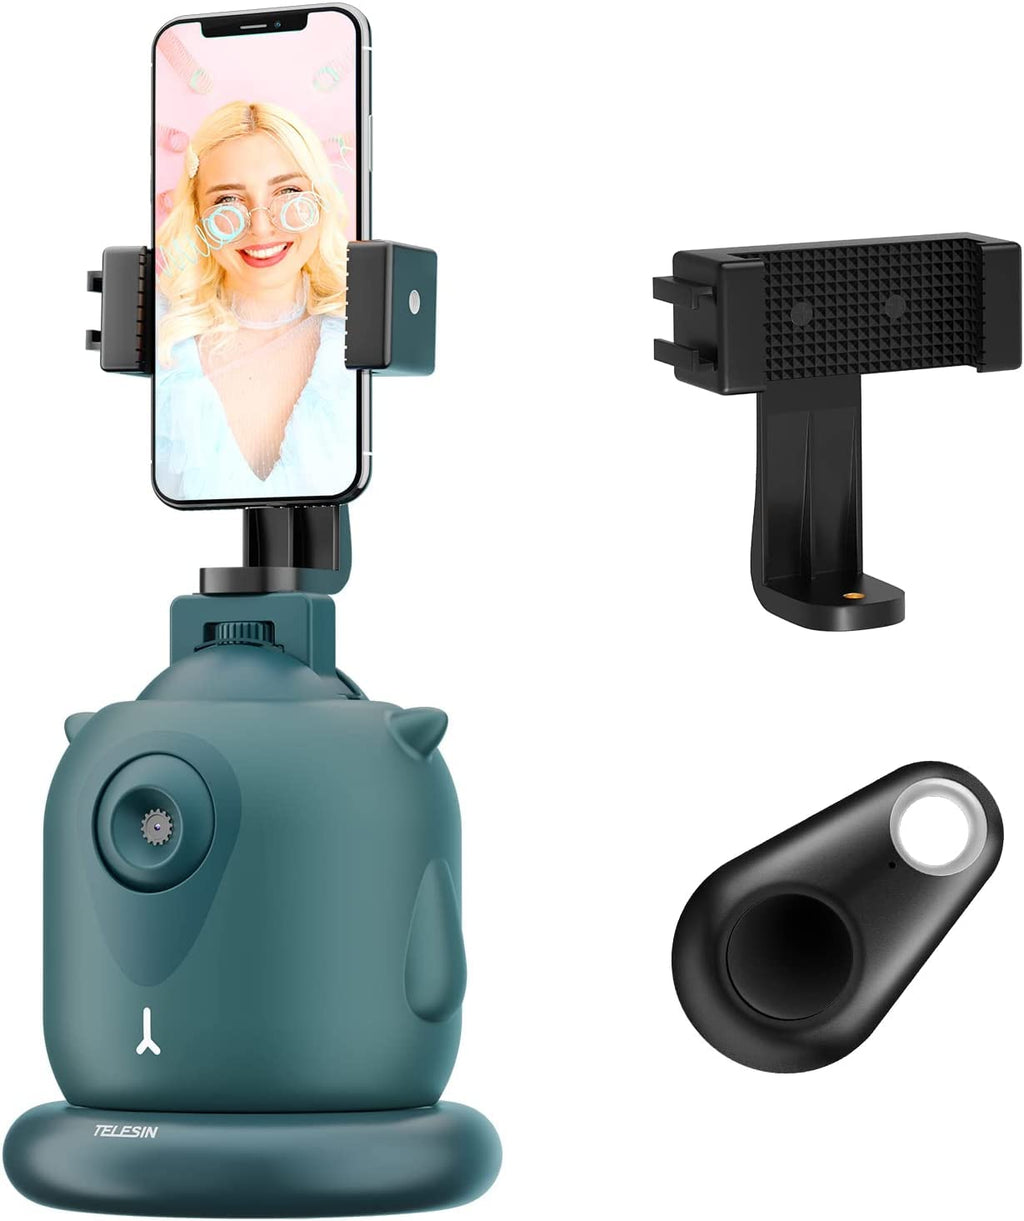  [AUSTRALIA] - Auto Tracking Phone Holder, AICOCO Auto Face Tracking Tripod, 360° Rotation Phone Camera Mount, AI-Powered Face & Body Tracking, No APP, Bluetooth Shutter, Selfie Stick Tripod for Video Recording